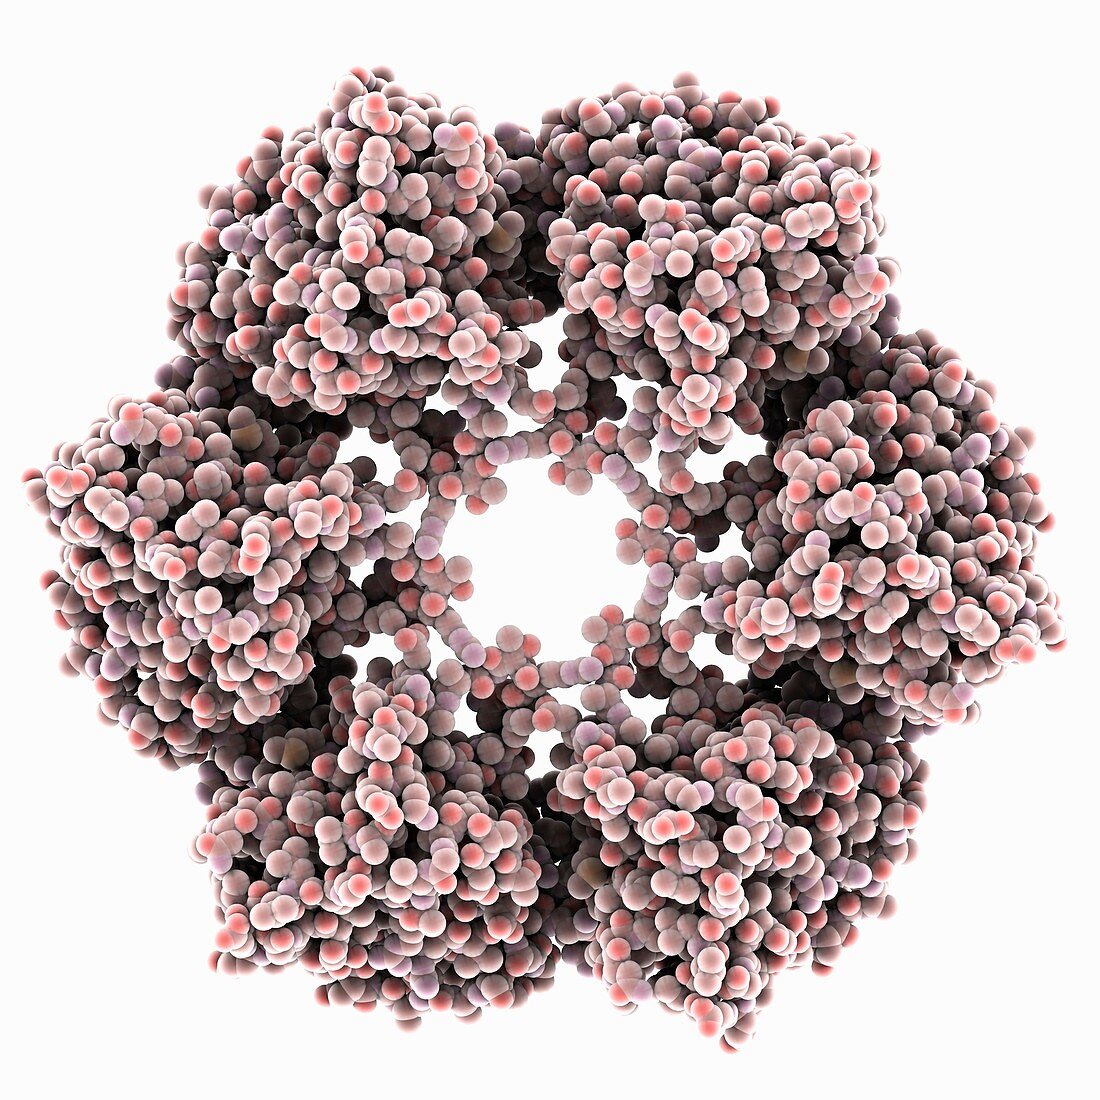 Toscana virus nucleocapsid protein